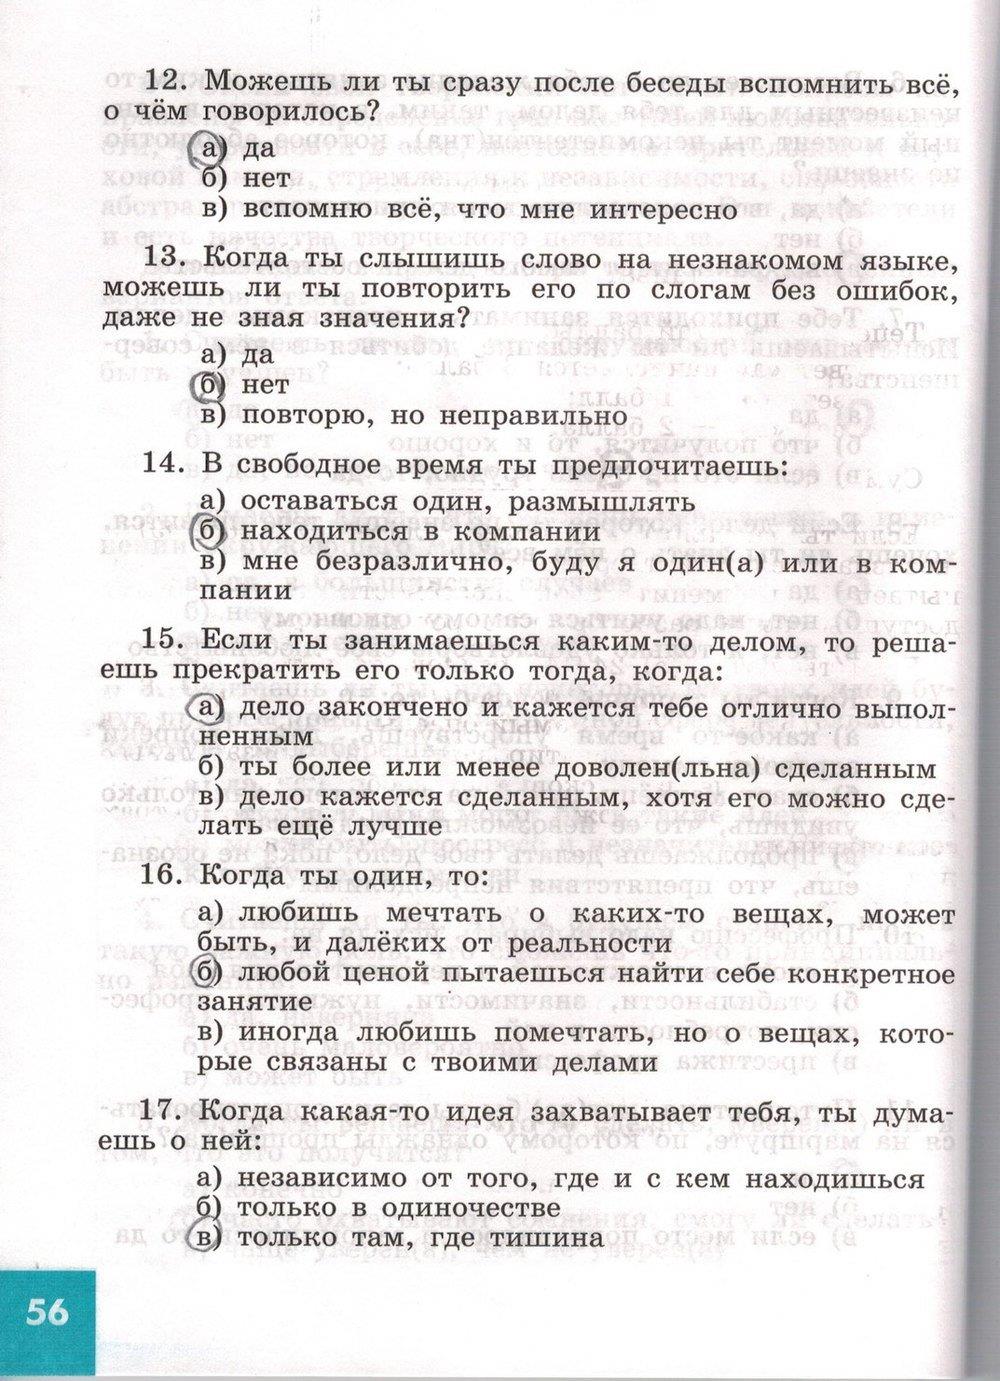 гдз 5 класс рабочая тетрадь страница 56 обществознание Иванова, Хотеенкова